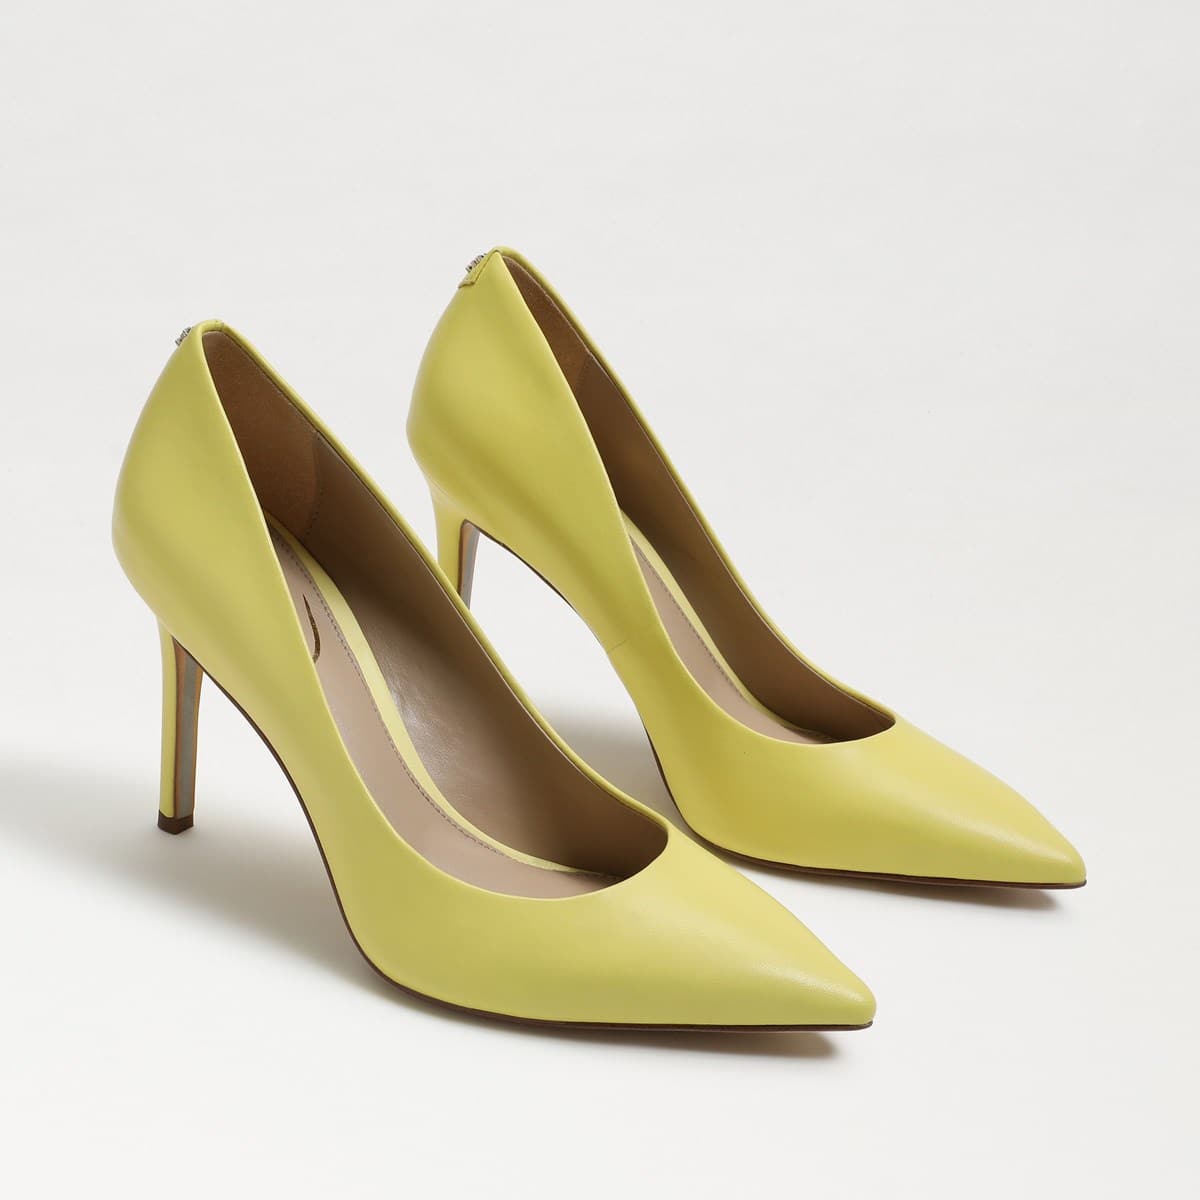 Sam Edelman Hazel Pointed Toe Heel Butter Yellow Leather s5P9dg6